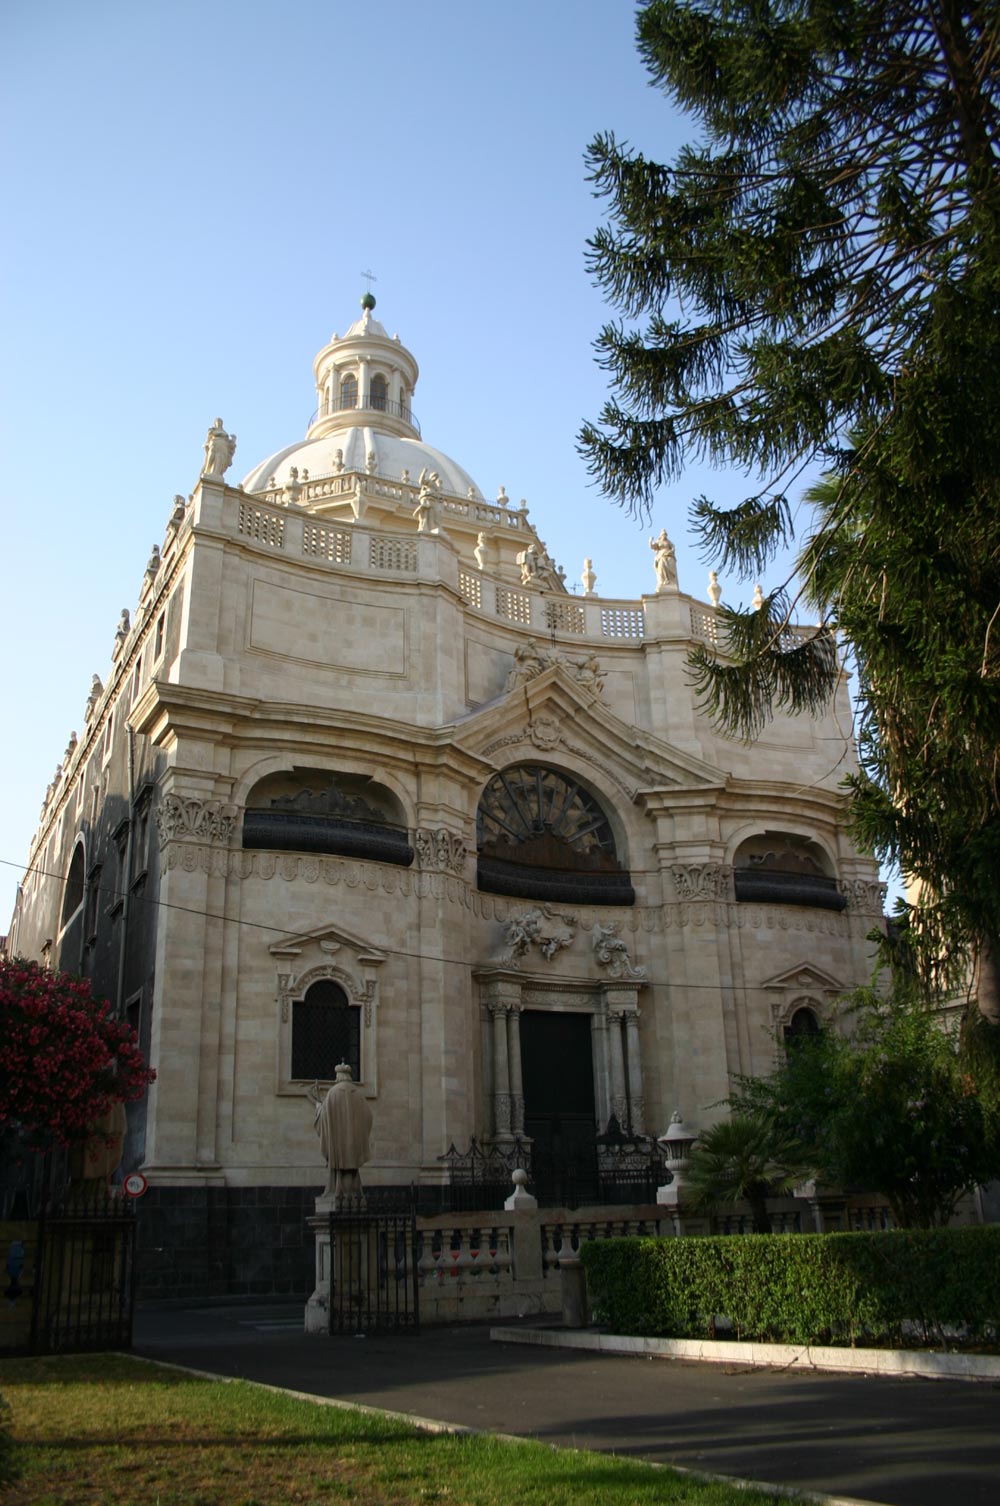 The church of the Abbey of St. Agatha